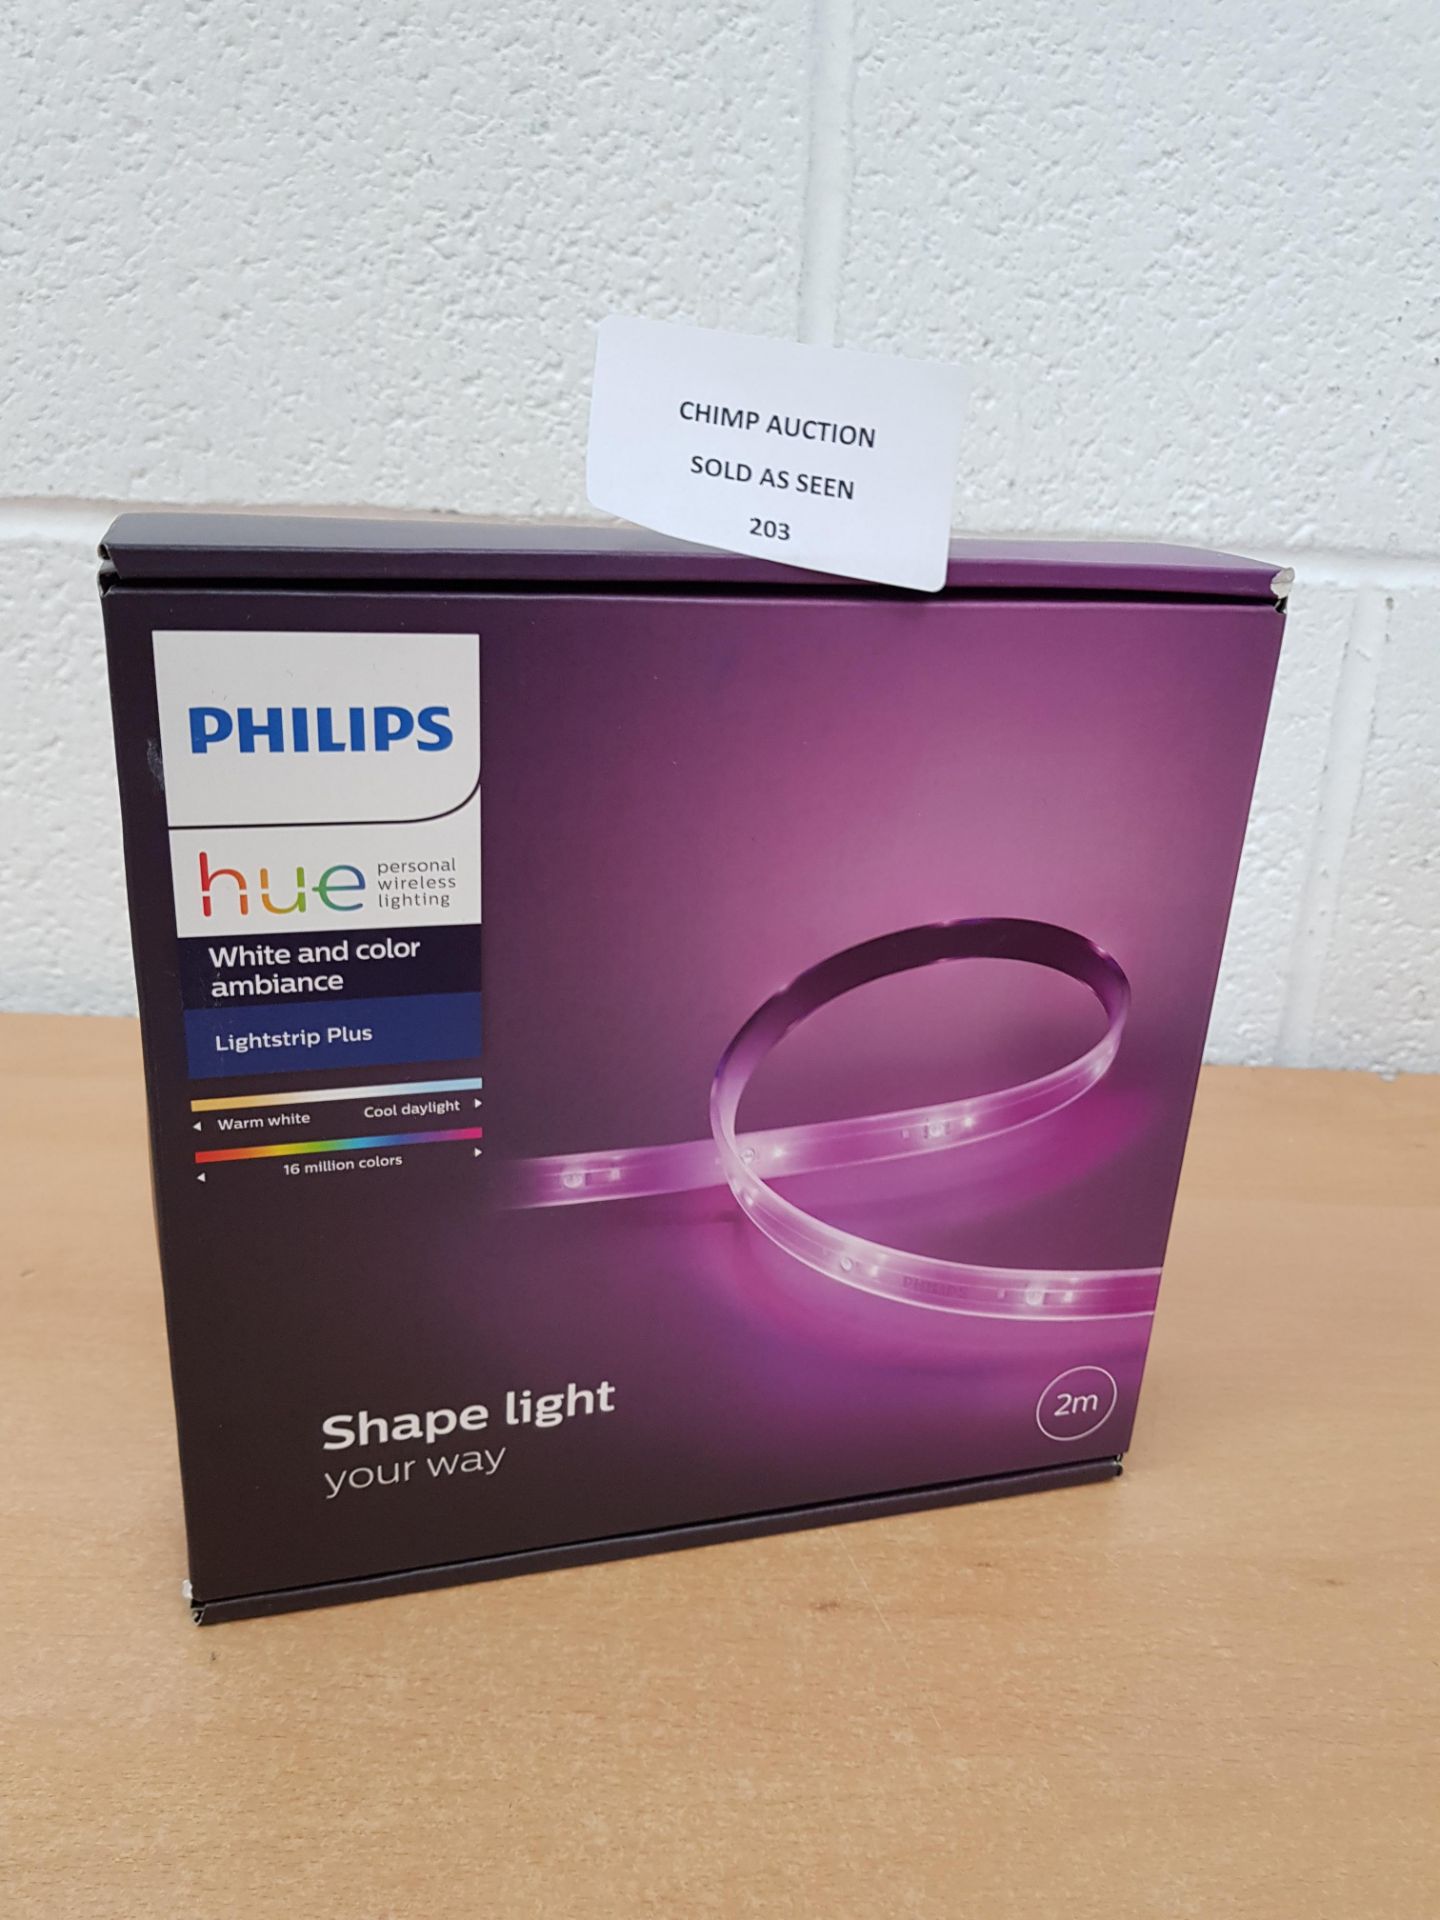 Philips Hue LightStrip Plus 2 m Colour Changing LED Smart Kit RRP £69.99.